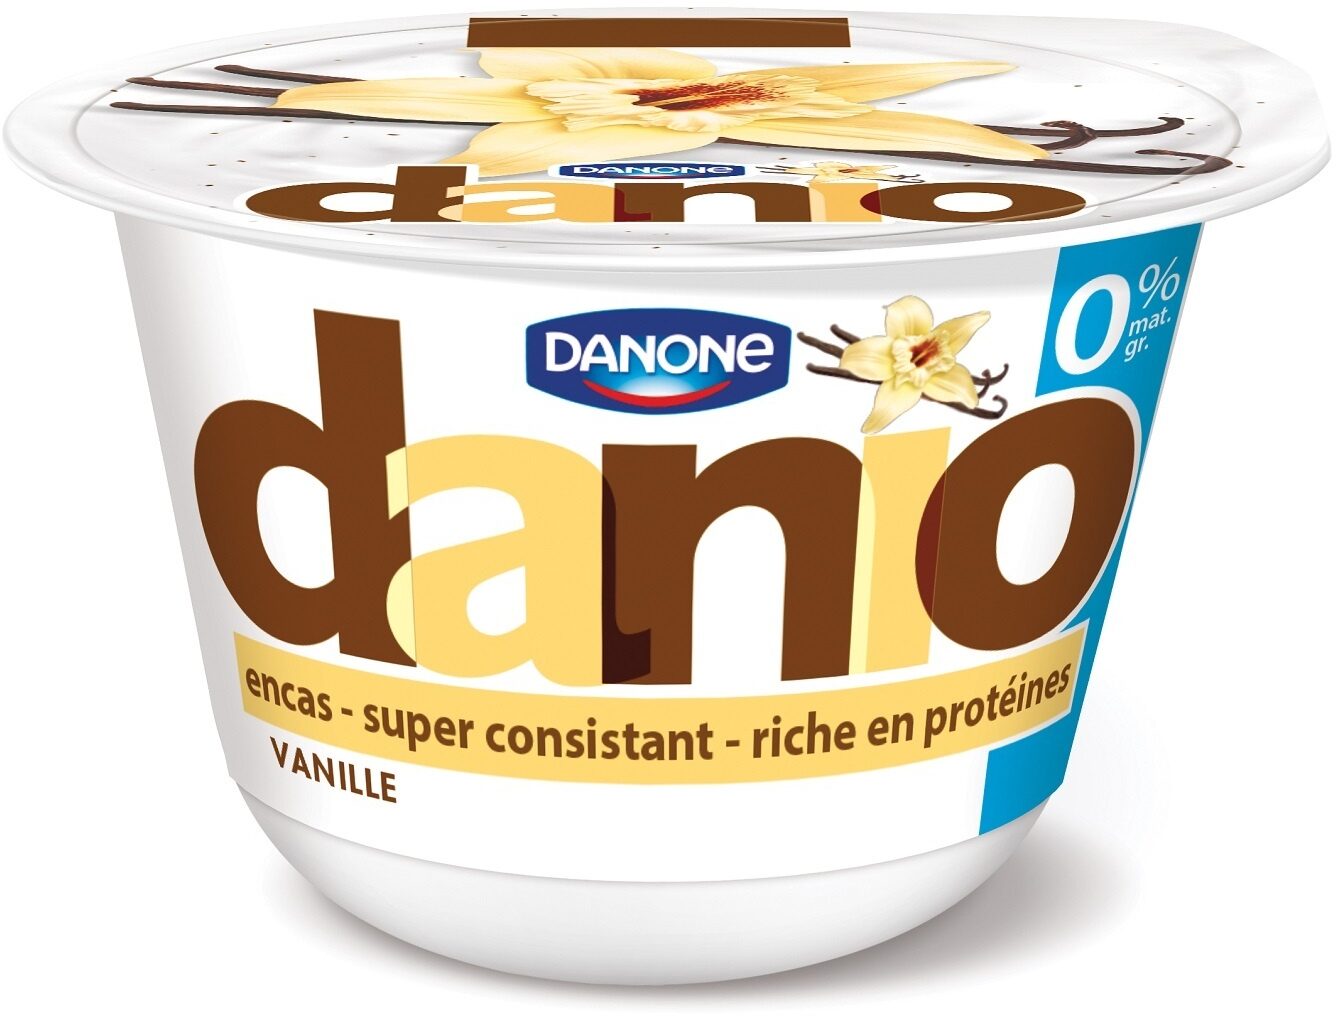 Danio 0% melange vanille 150 g x 1 - Product - fr